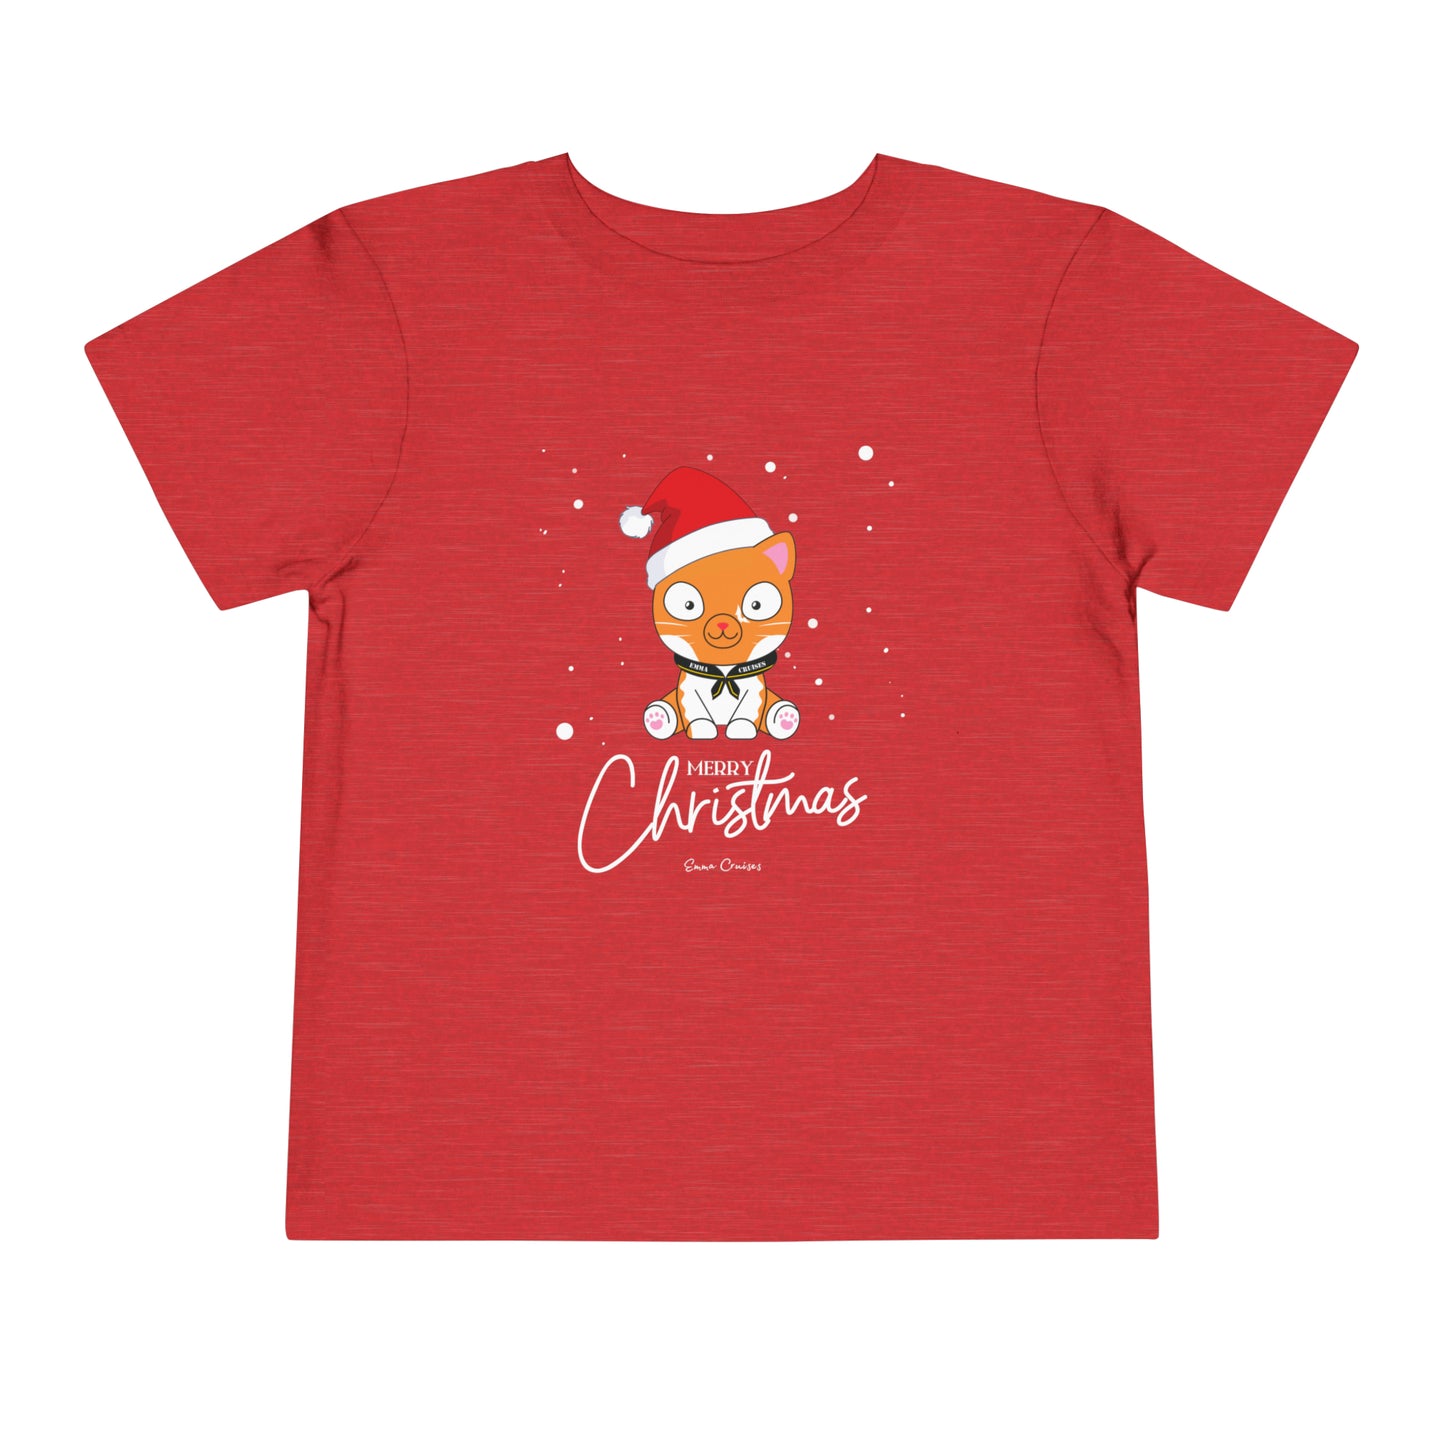 Merry Christmas - Toddler UNISEX T-Shirt